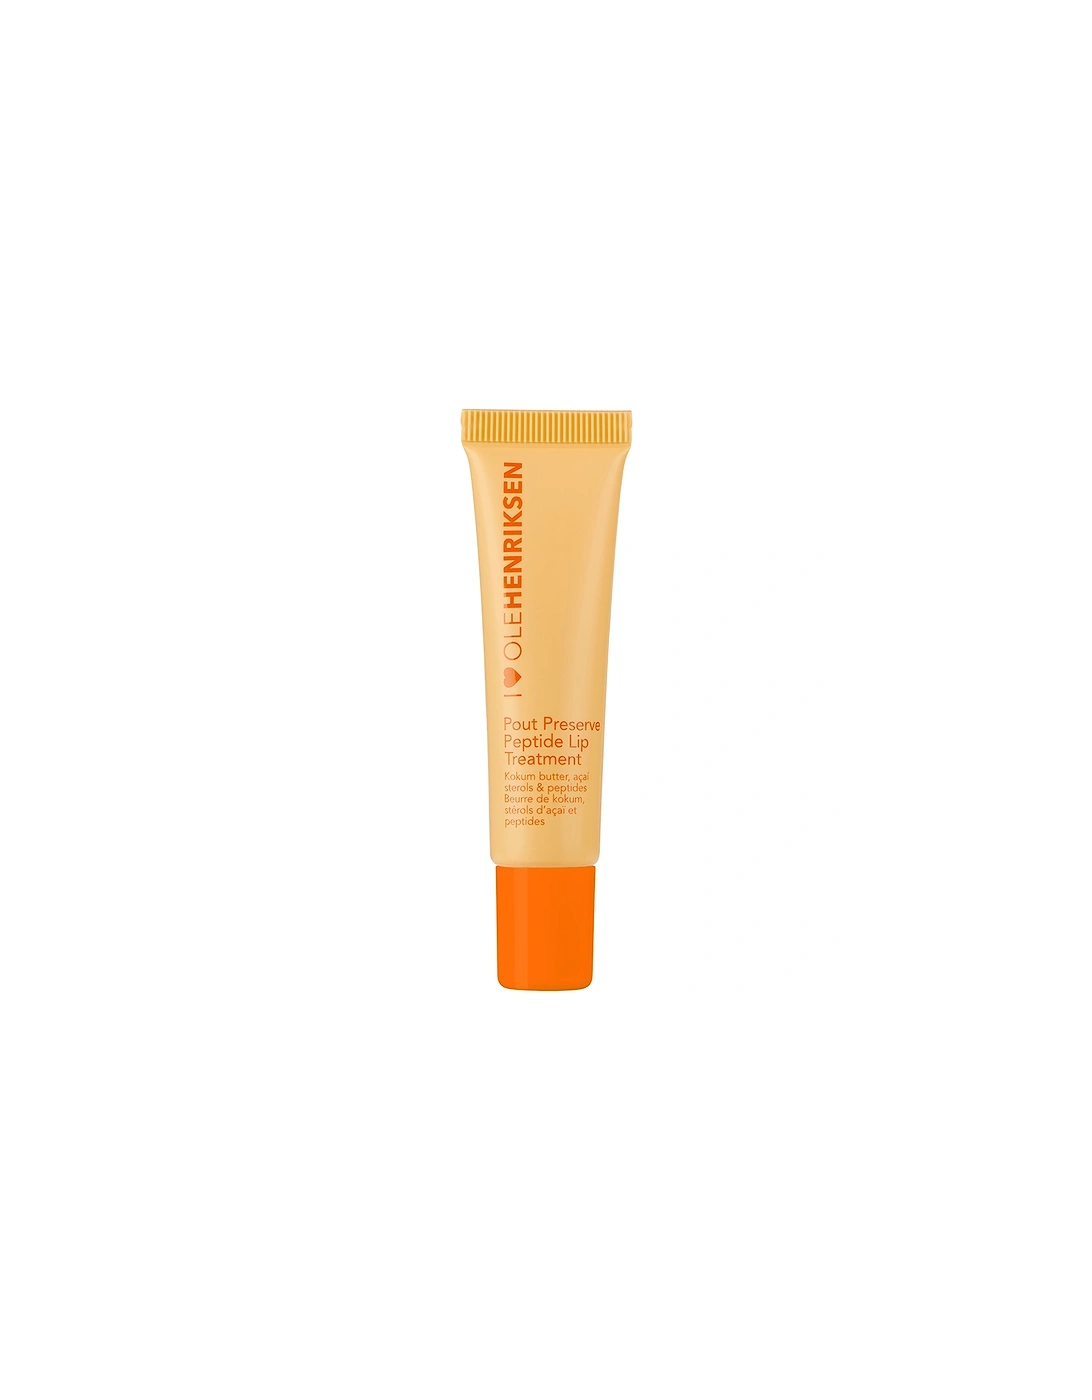 Pout Preserve Peptide Lip Treatment - Citrus Sunshine (Original) 12ml, 2 of 1